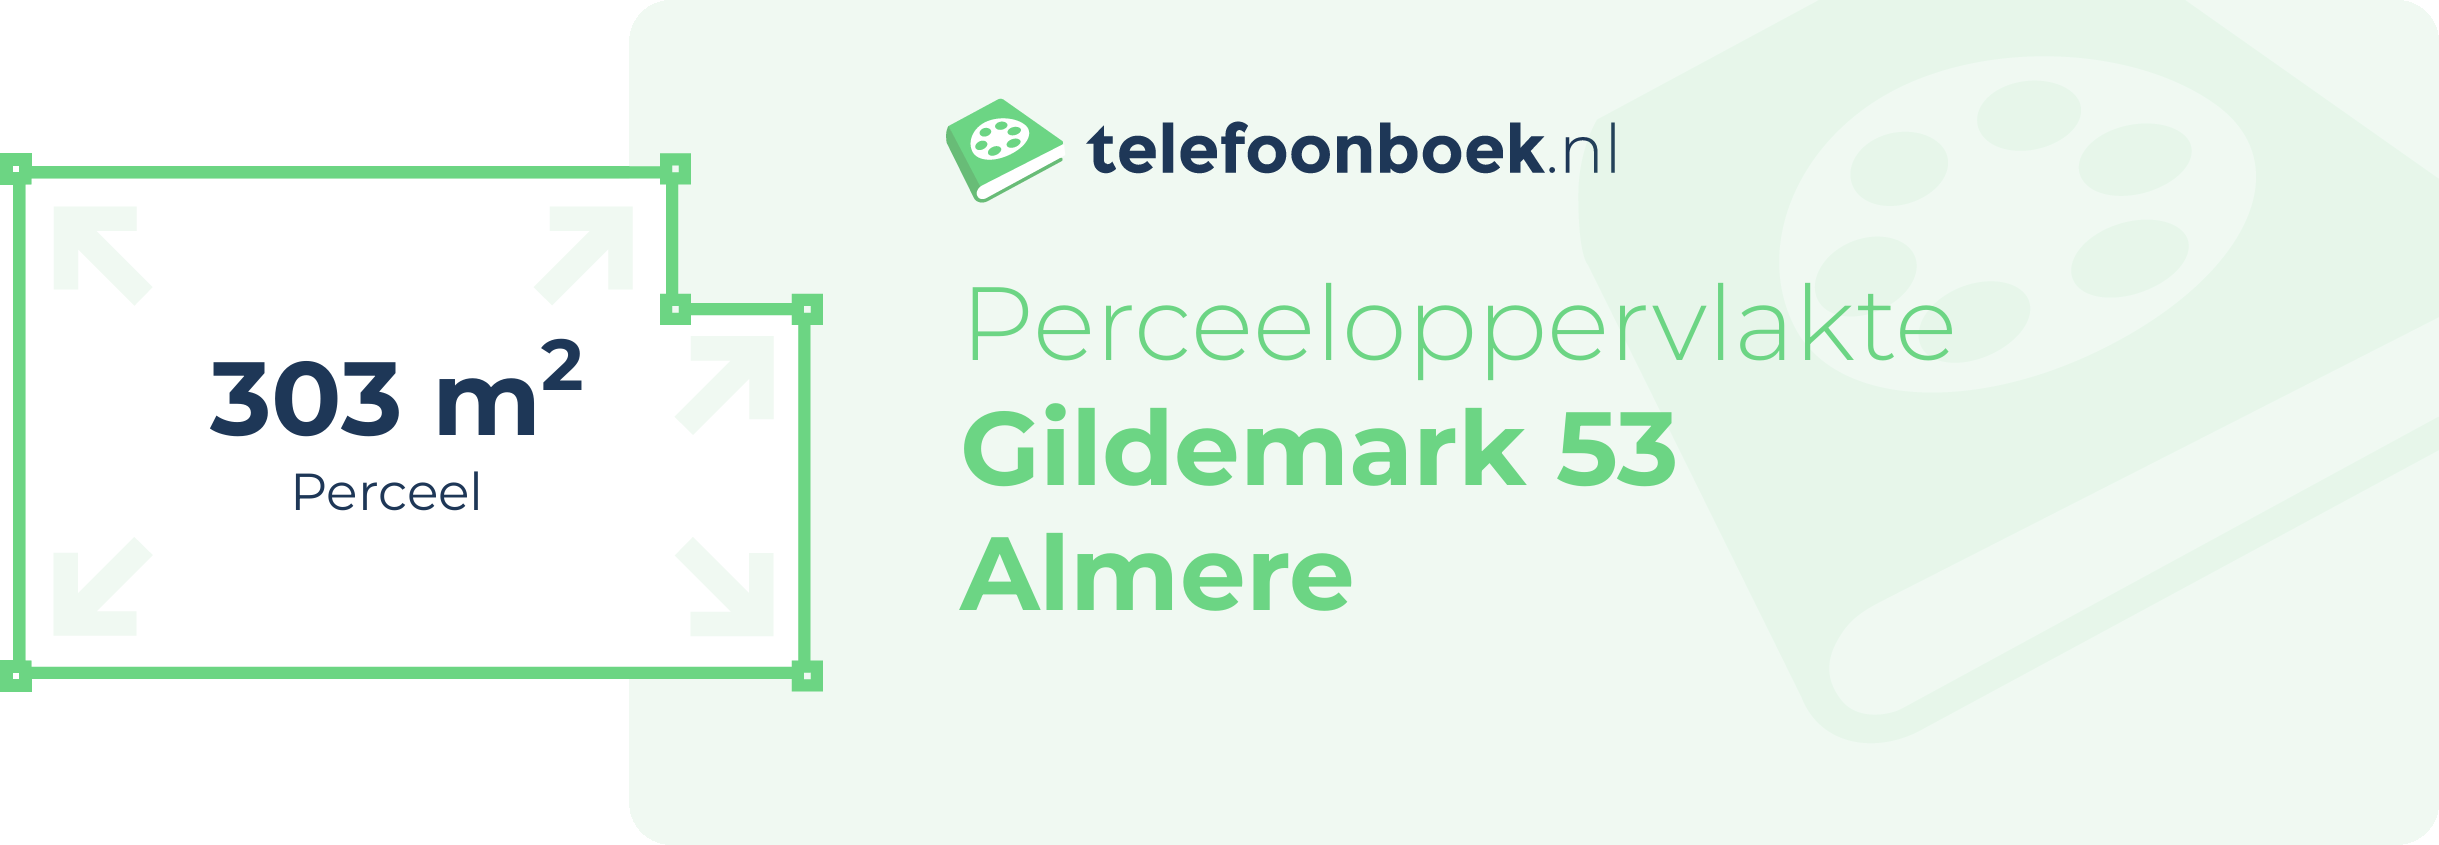 Perceeloppervlakte Gildemark 53 Almere